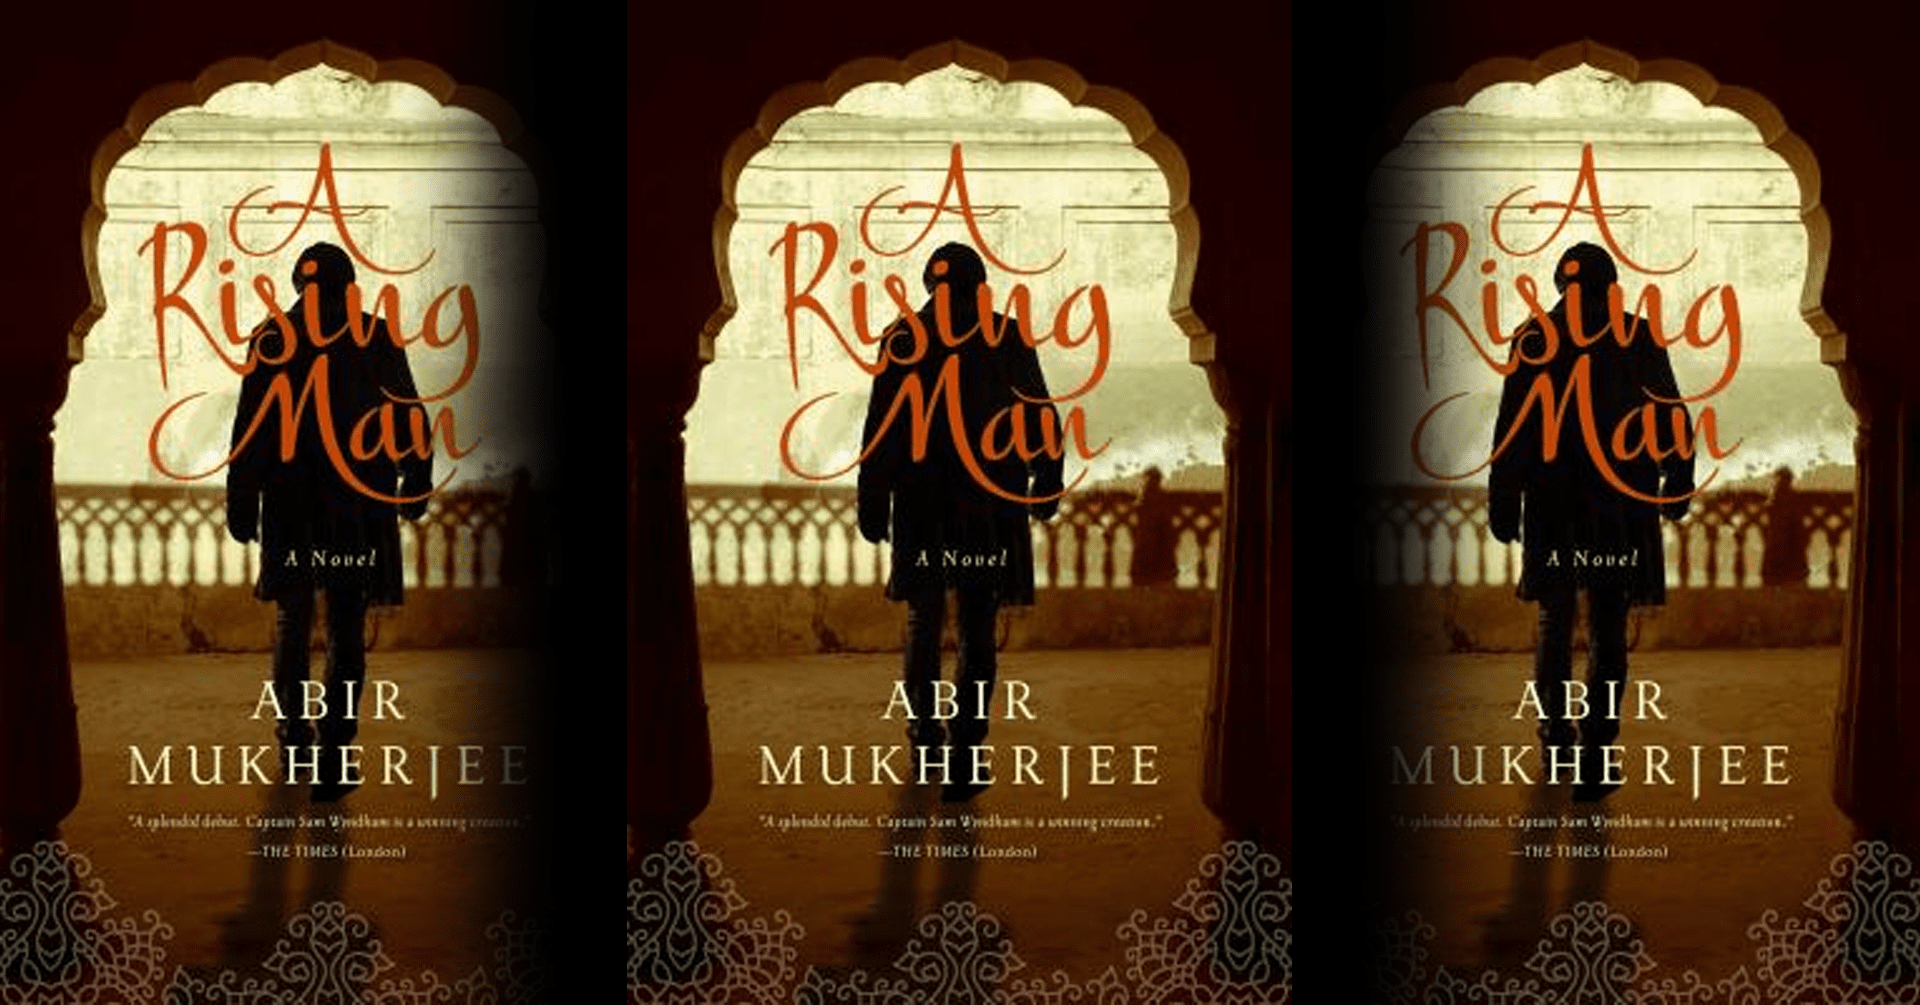 A Rising Man by Abir Mukherjee (book cover)